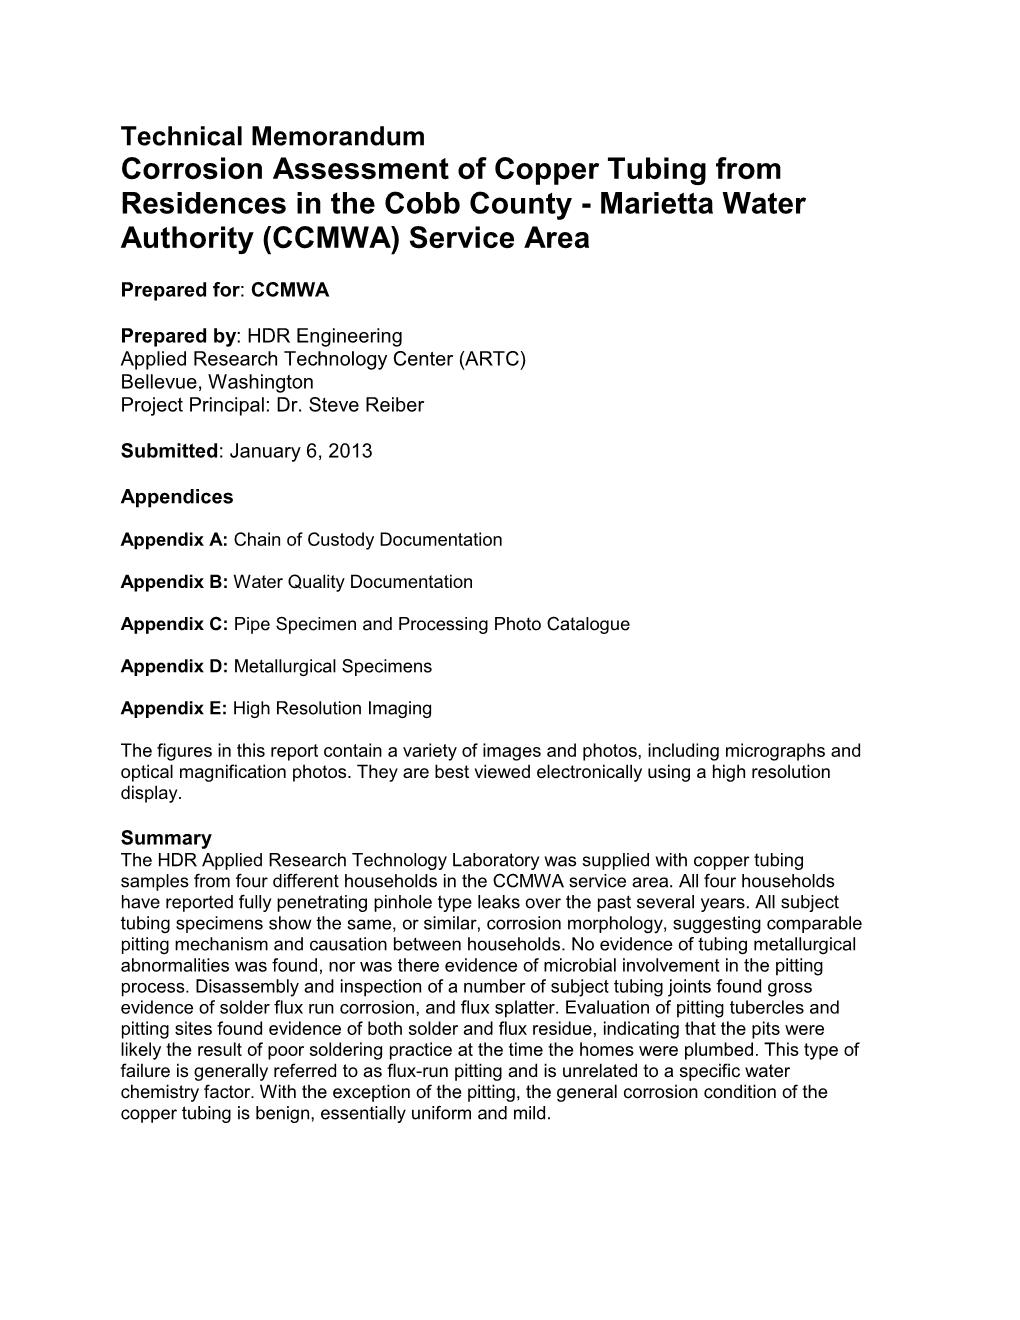 Cobb County-Marietta Water Authority Copper Corrosion Study 2013